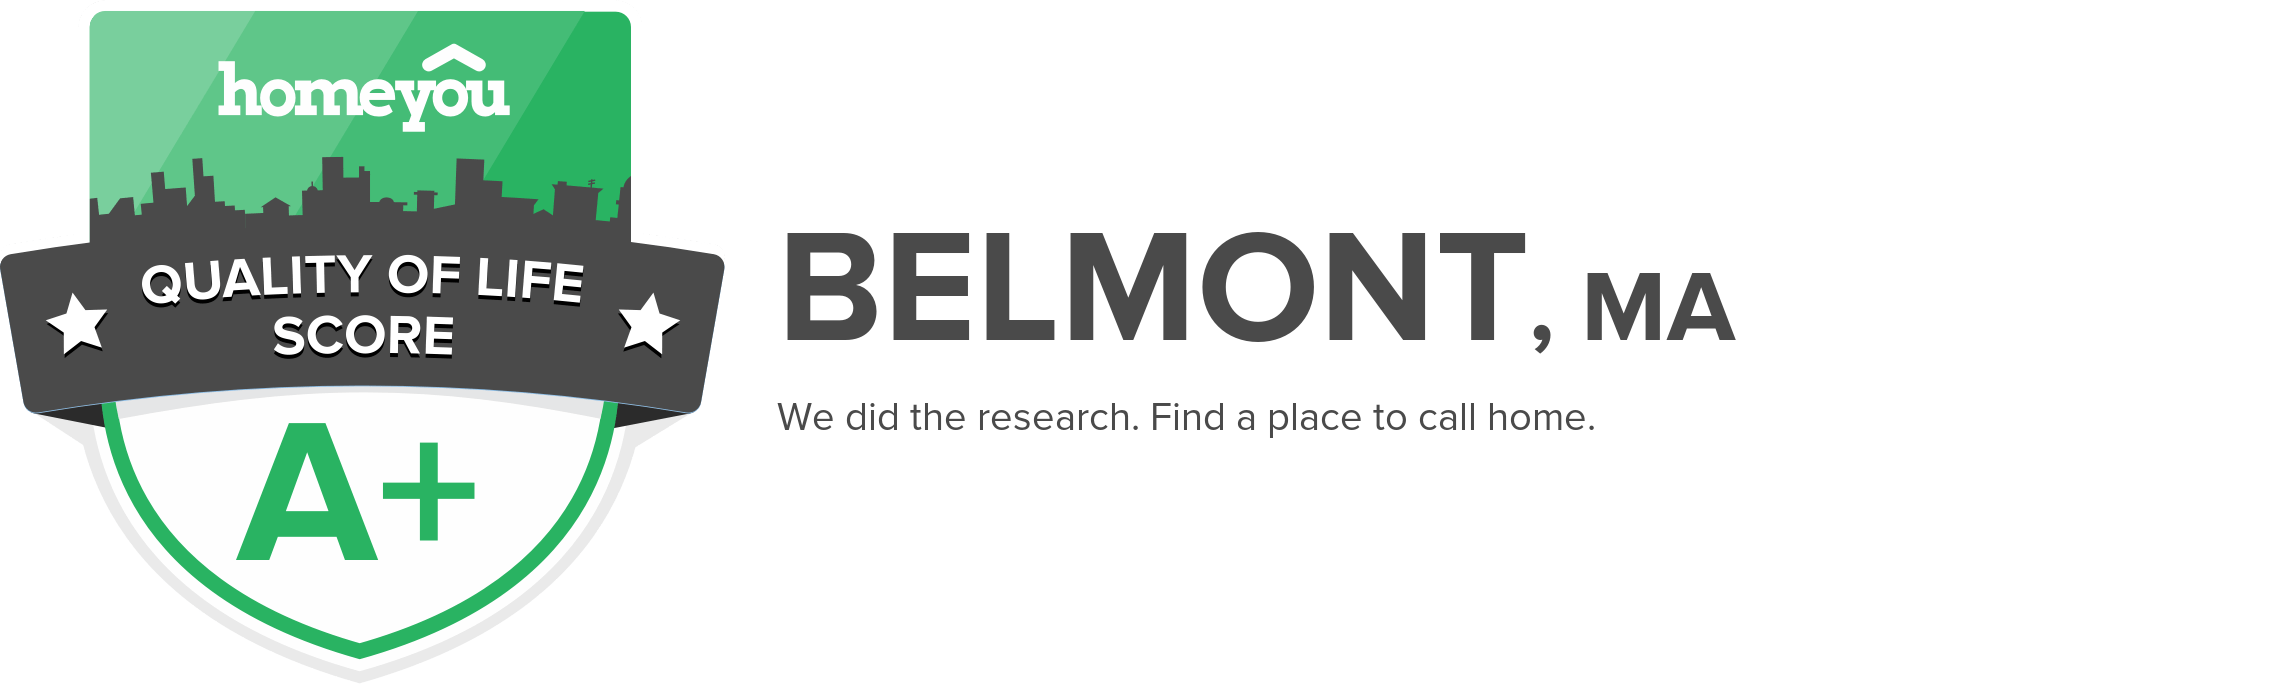 Belmont, MA